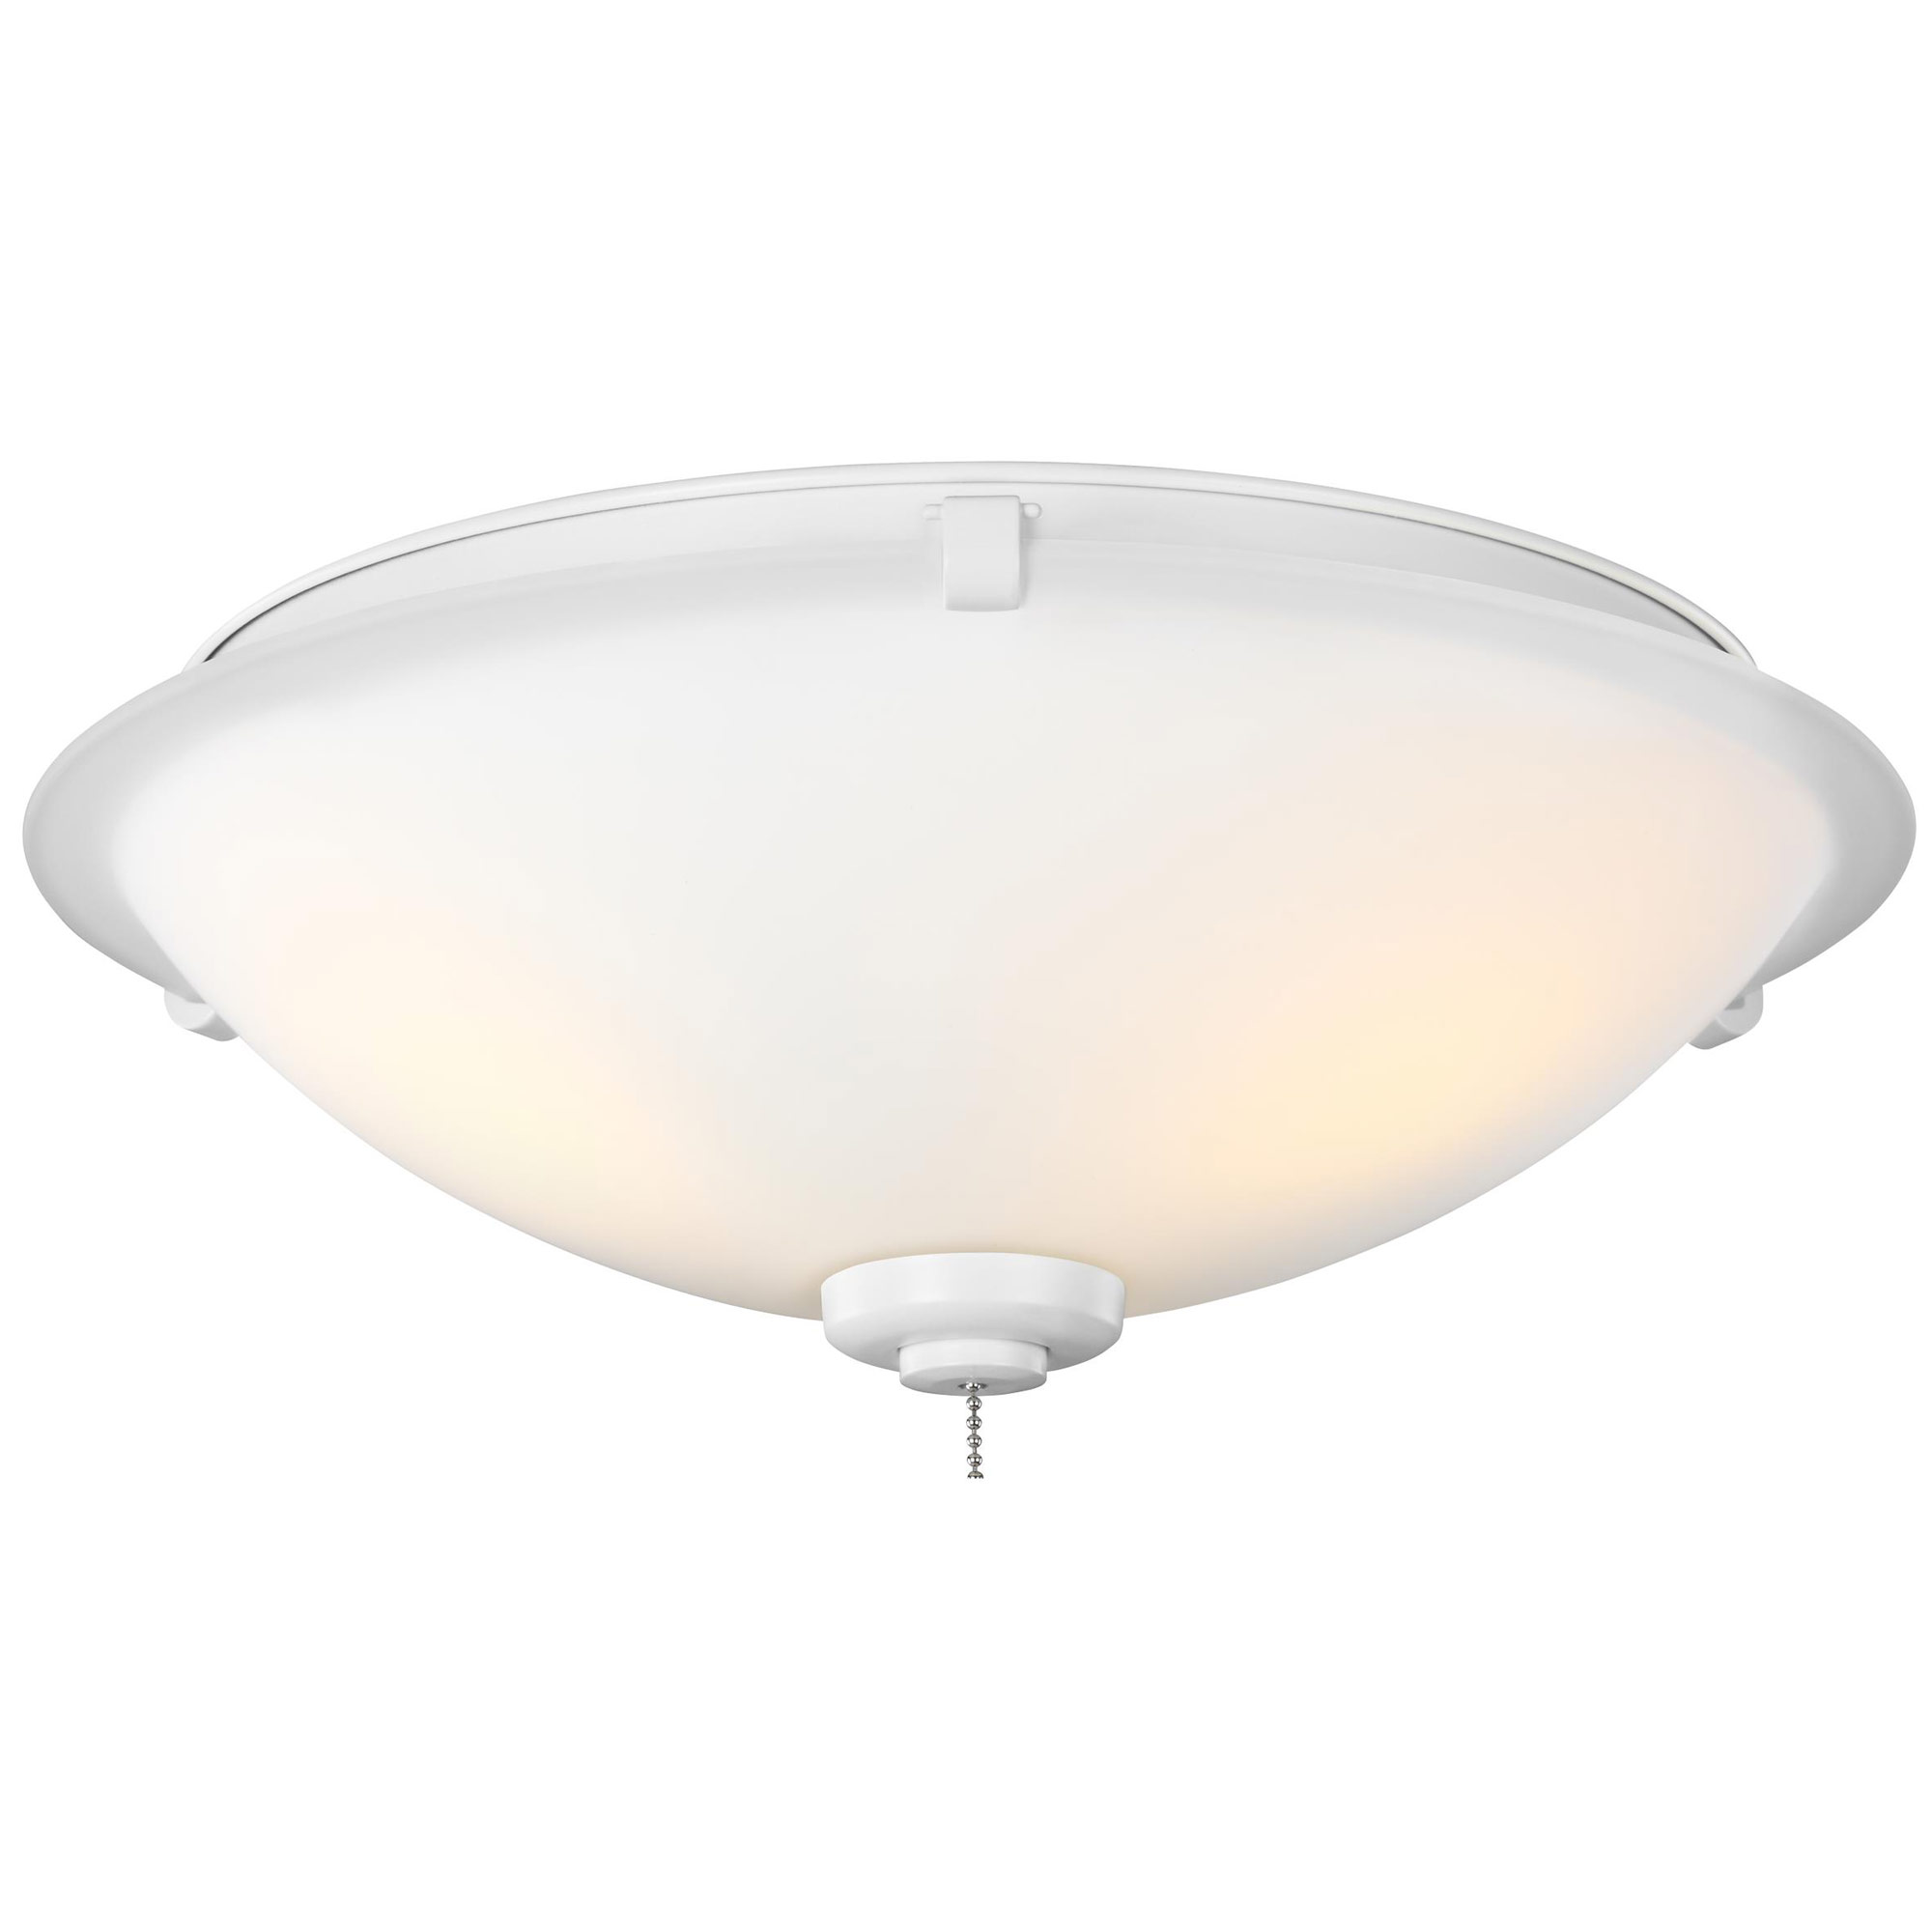 MC247 Dome LED Ceiling Fan Light Kit by Visual Comfort Fan MC247RZW  MTC1041363